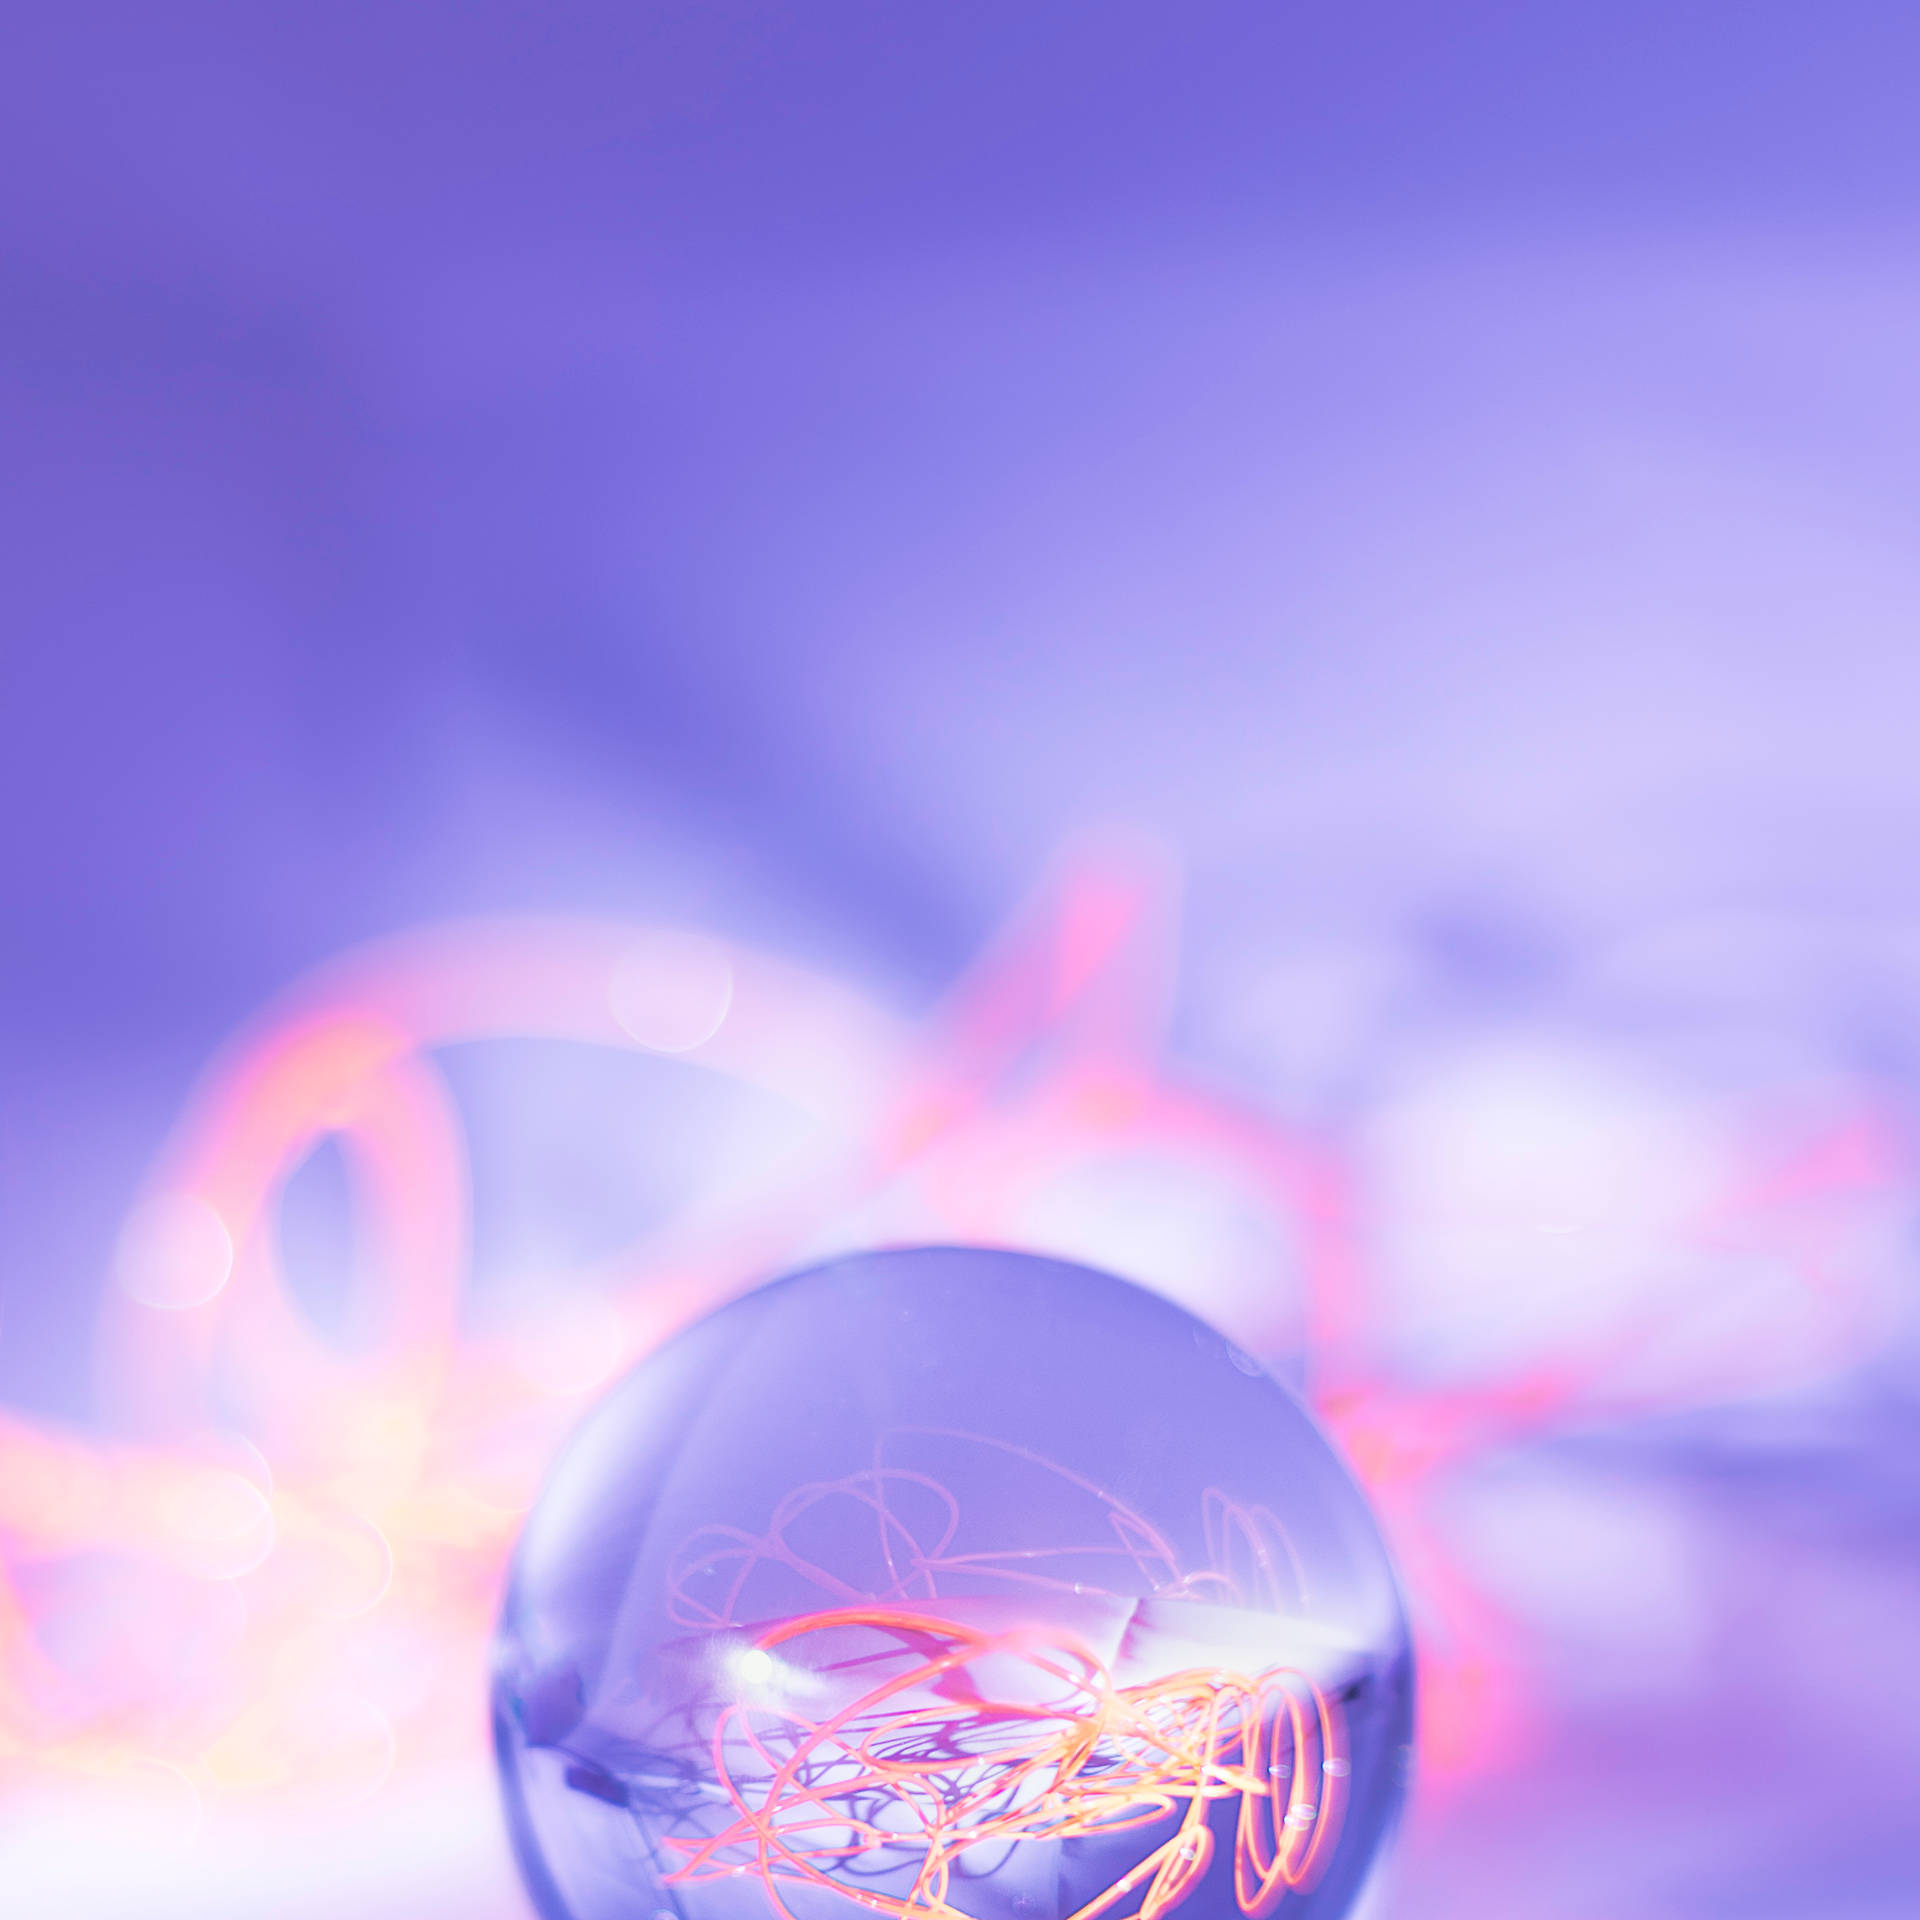 Purple Crystal Ball Drop Background